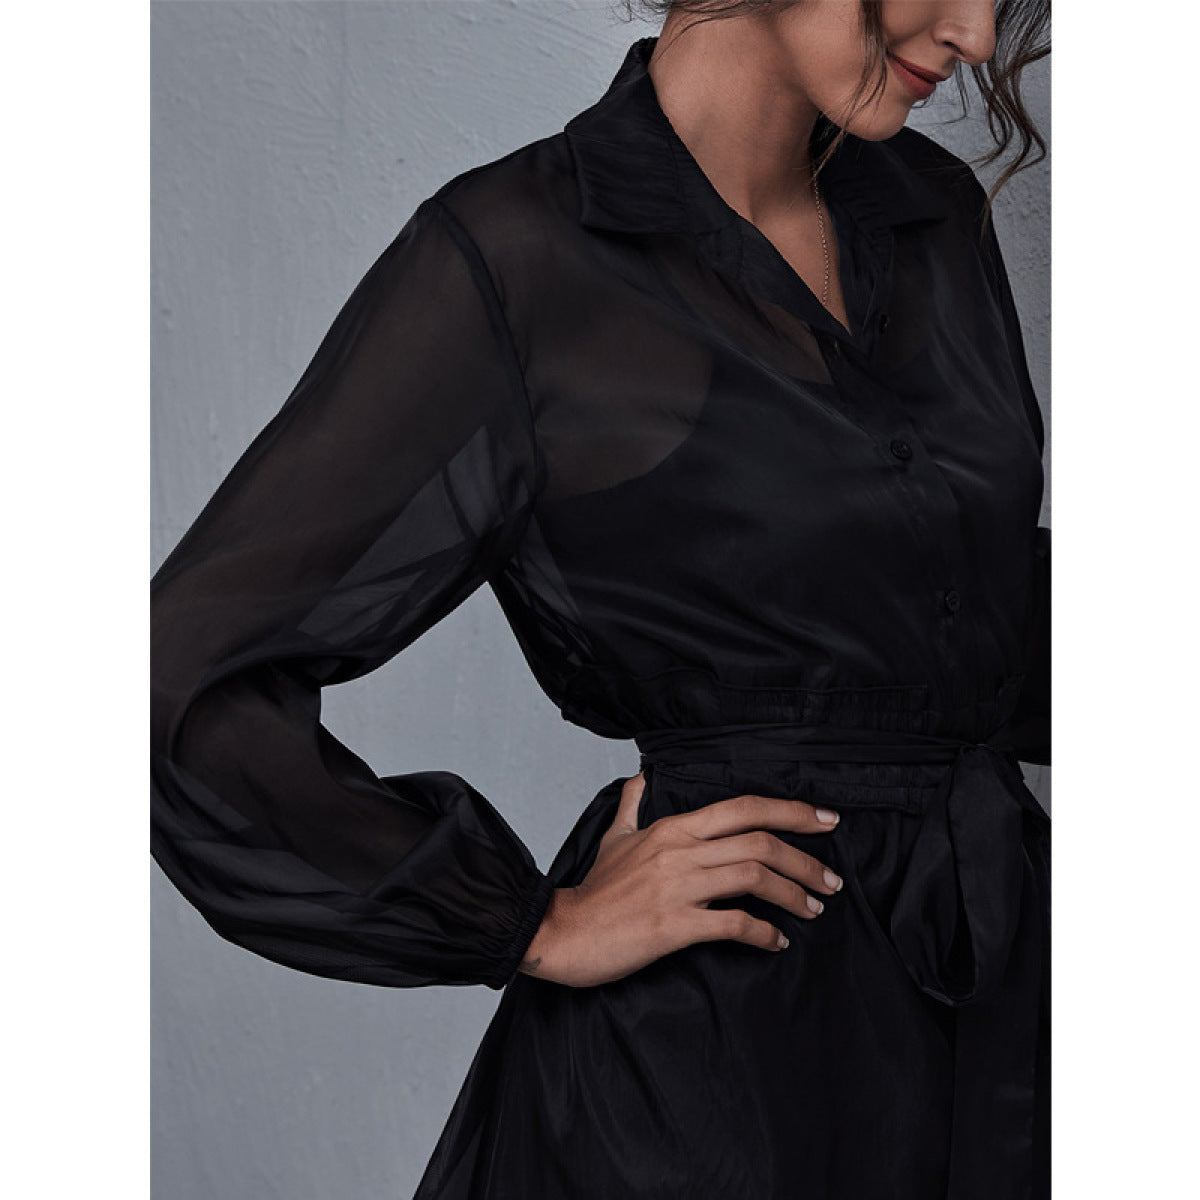 Black Collared Neck Lantern Sleeve Single-Breasted Tie Waist Sheer Mini Dress